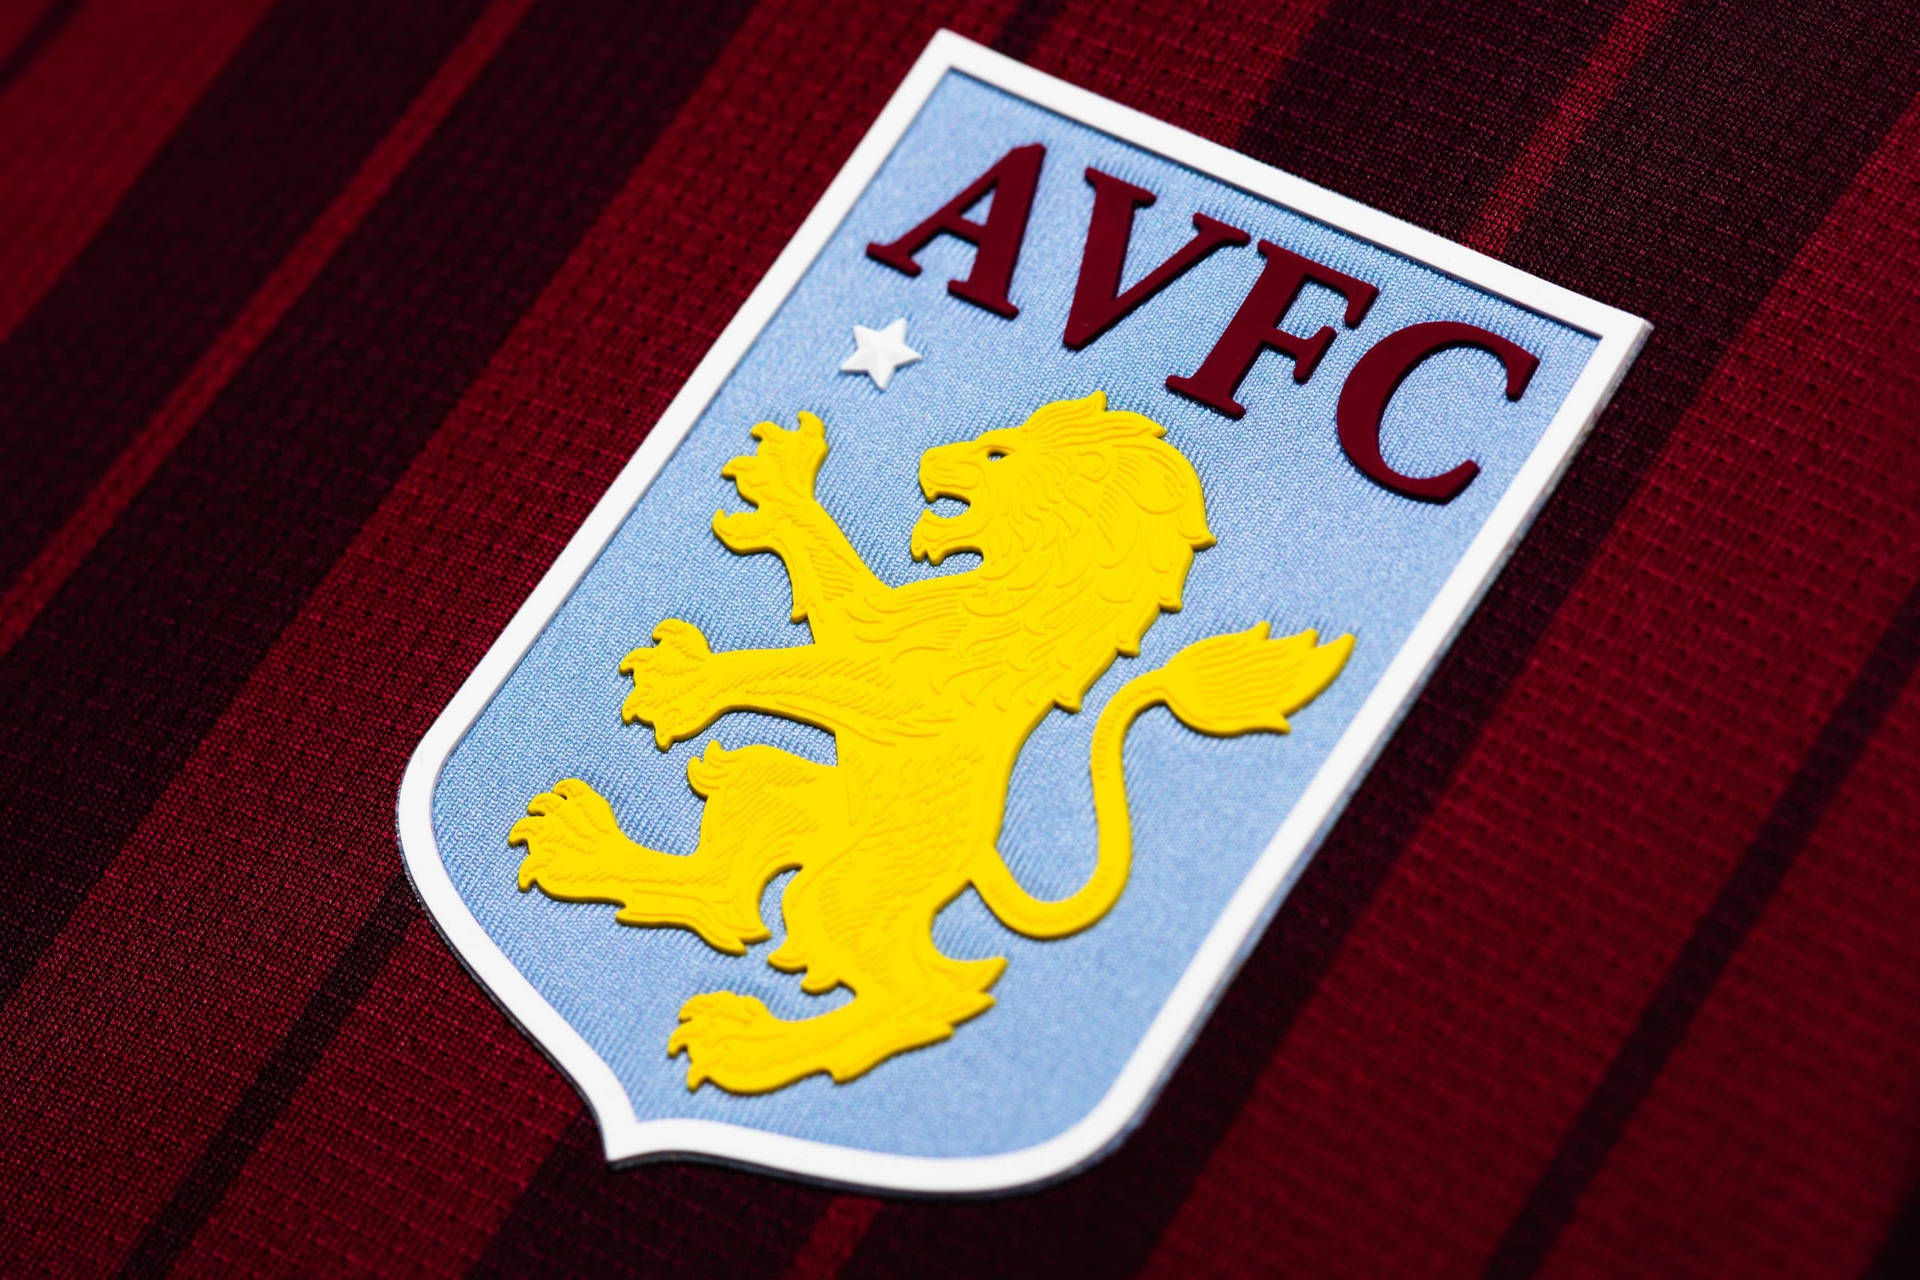 Download Aston Villa Official Team Kit and Logo Wallpaper | Wallpapers.com